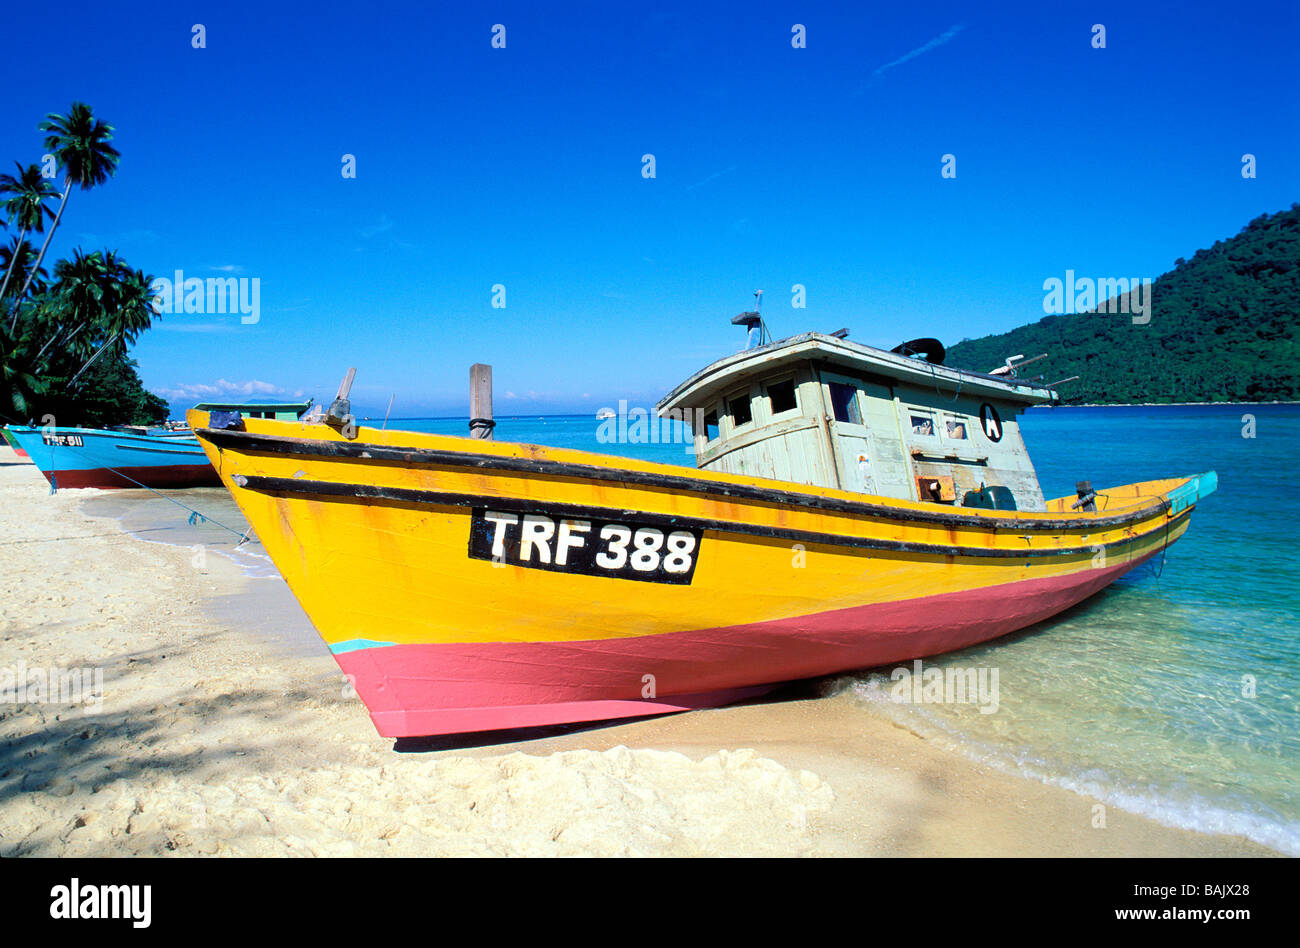 Malaysia, Terengganu State, Perhentian Islands, fishing boat on the beach Stock Photo